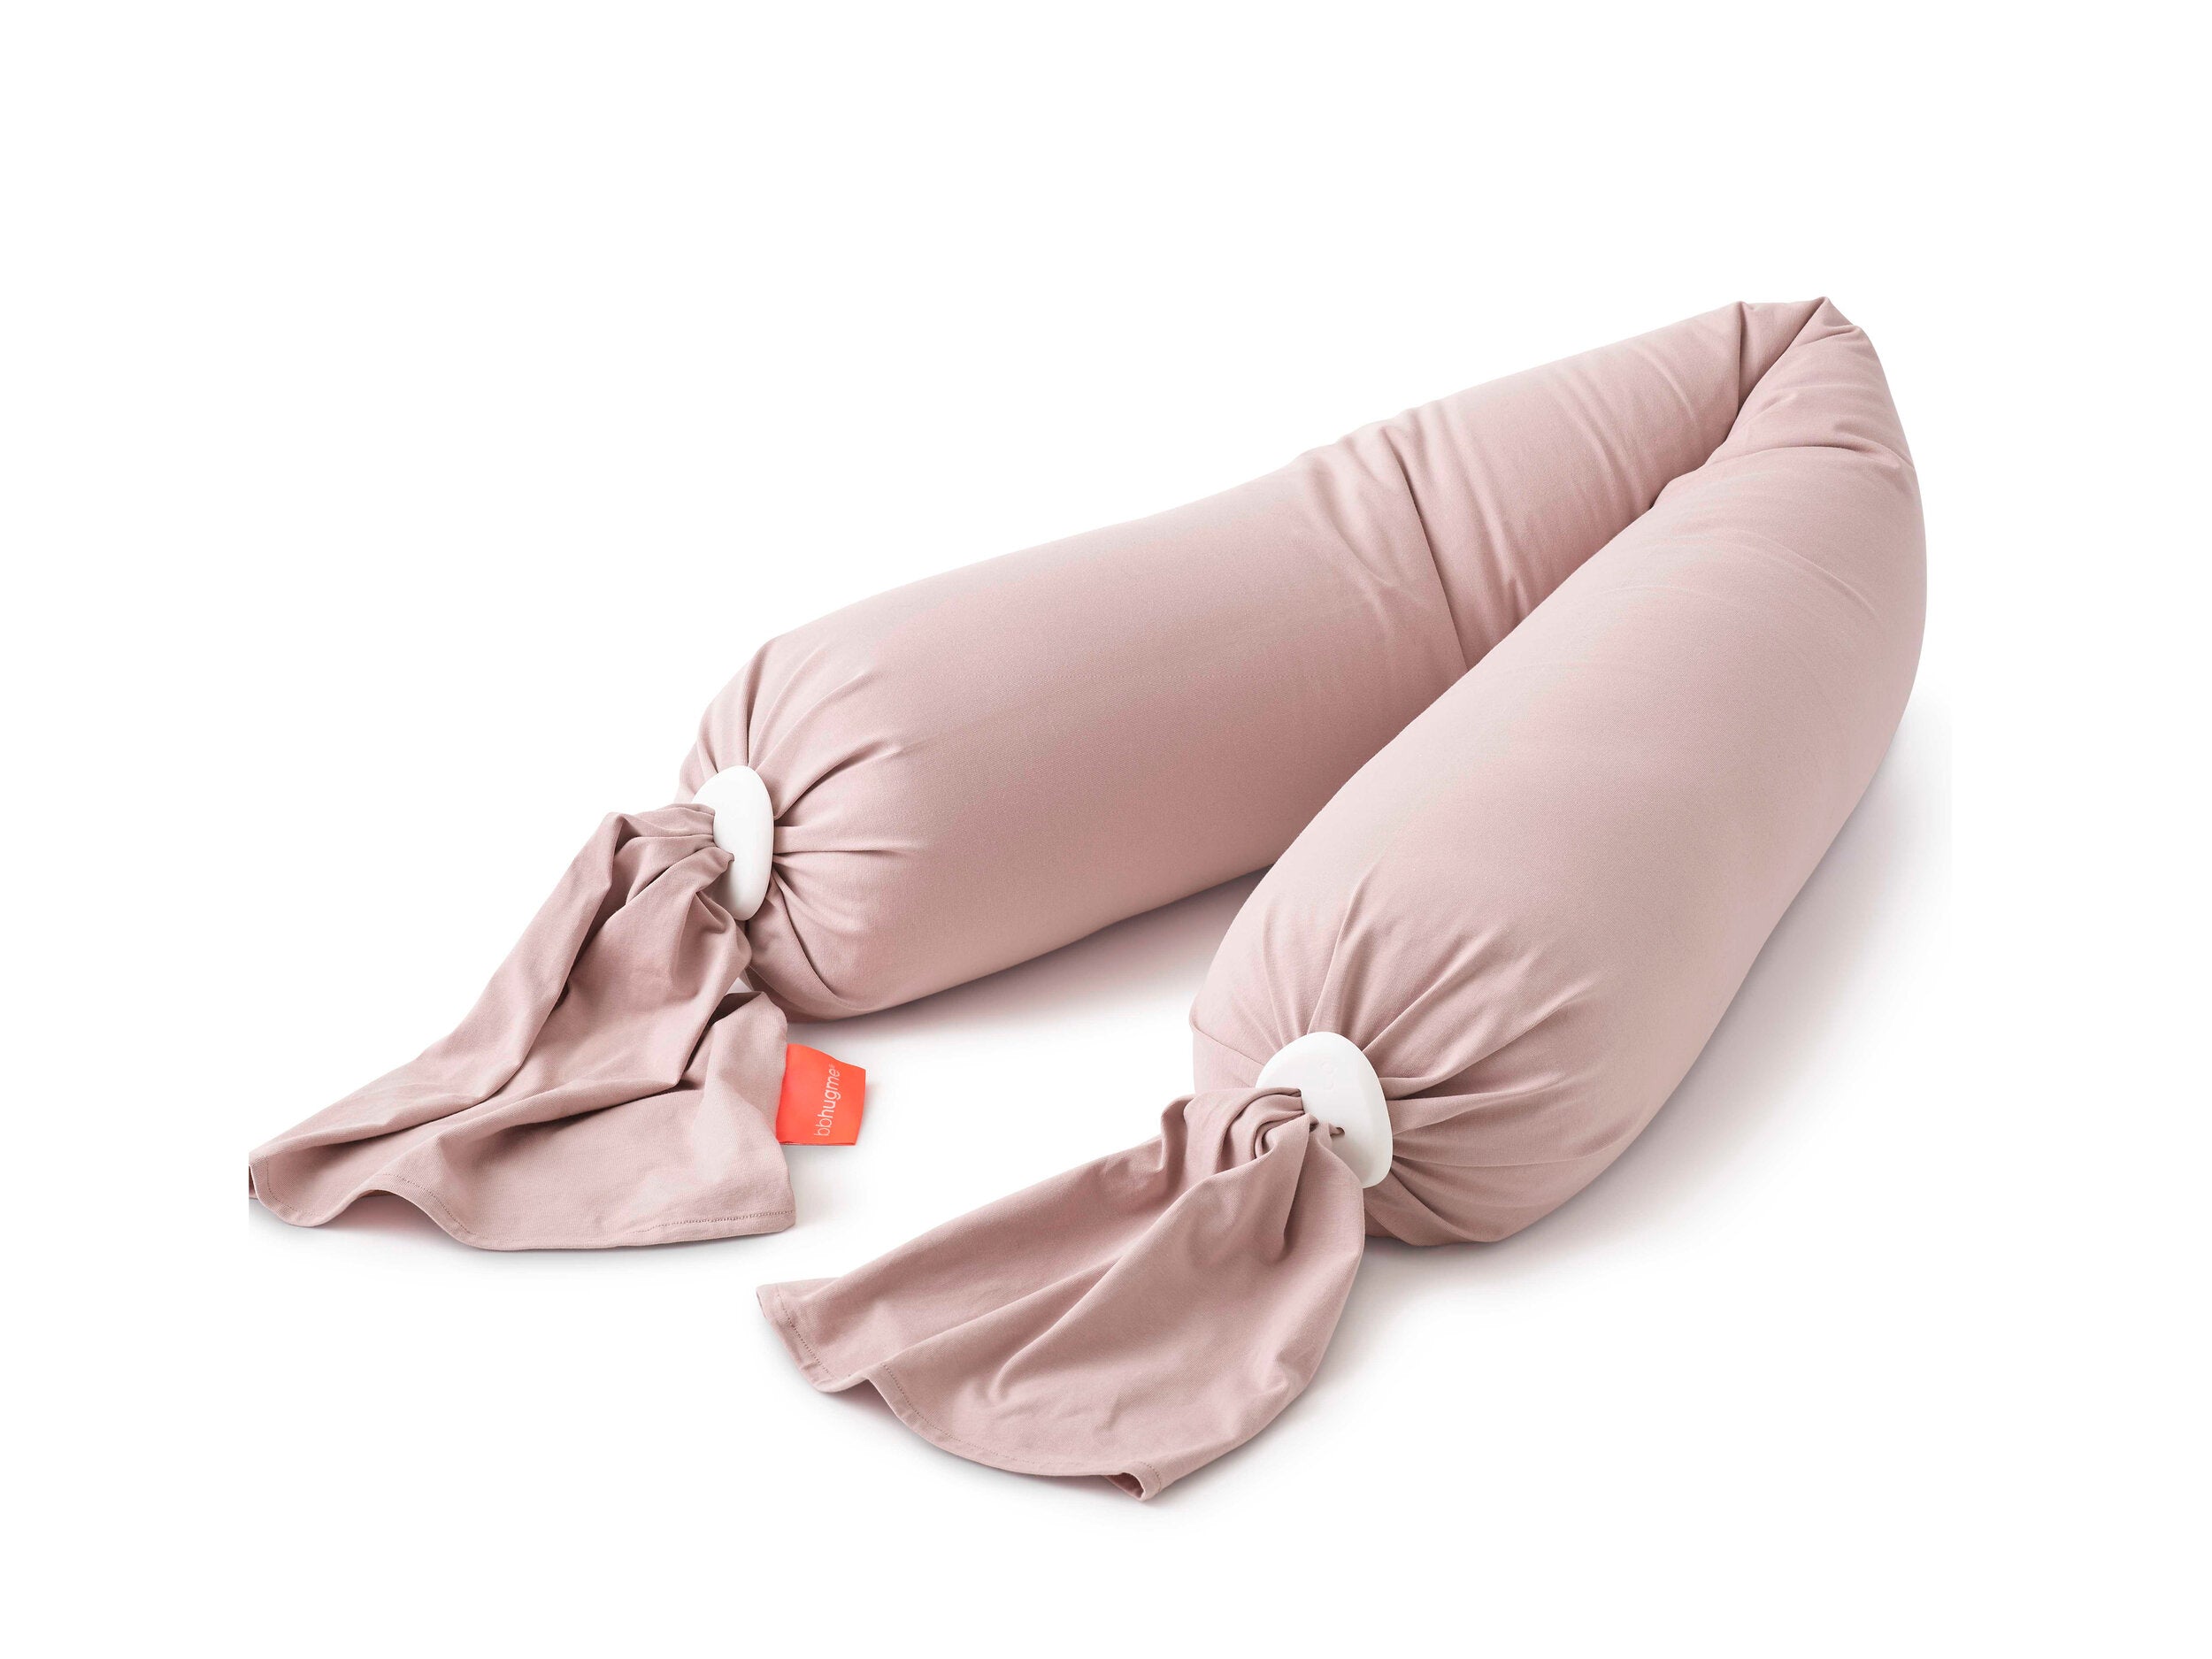 Bbhugme Pregnancy Pillow dusty pink